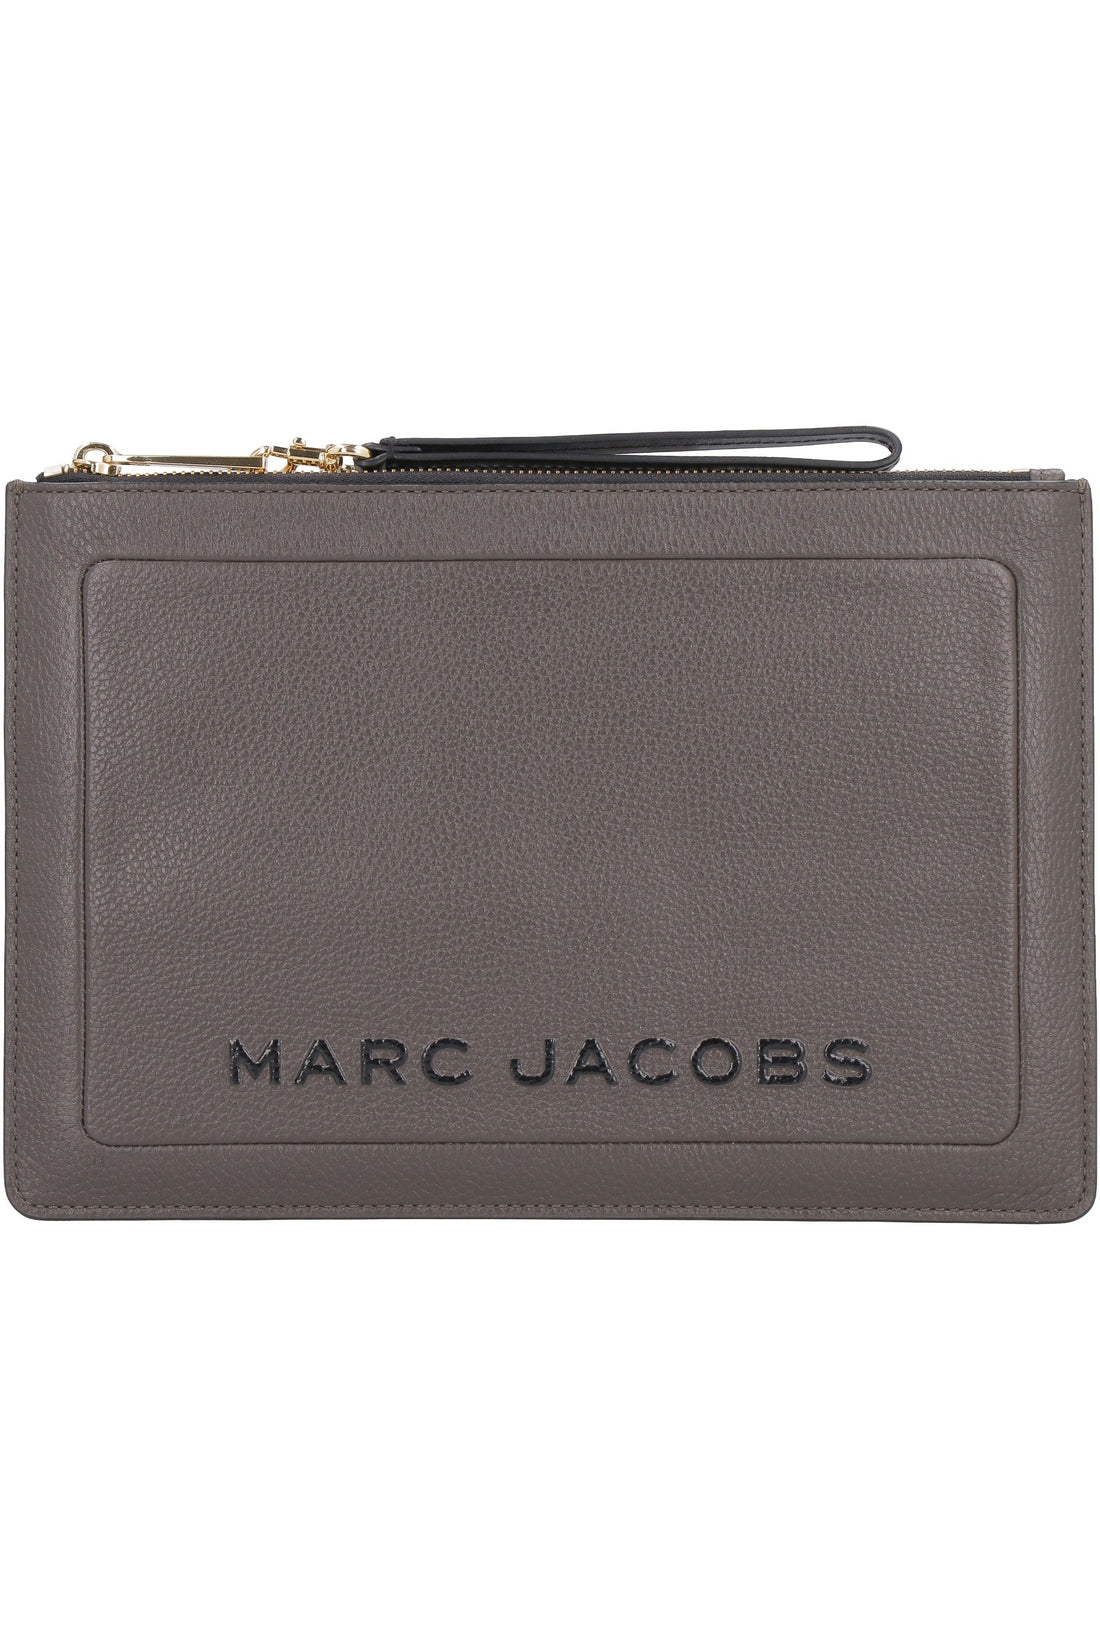 Marc Jacobs-OUTLET-SALE-The Box leather clutch-ARCHIVIST